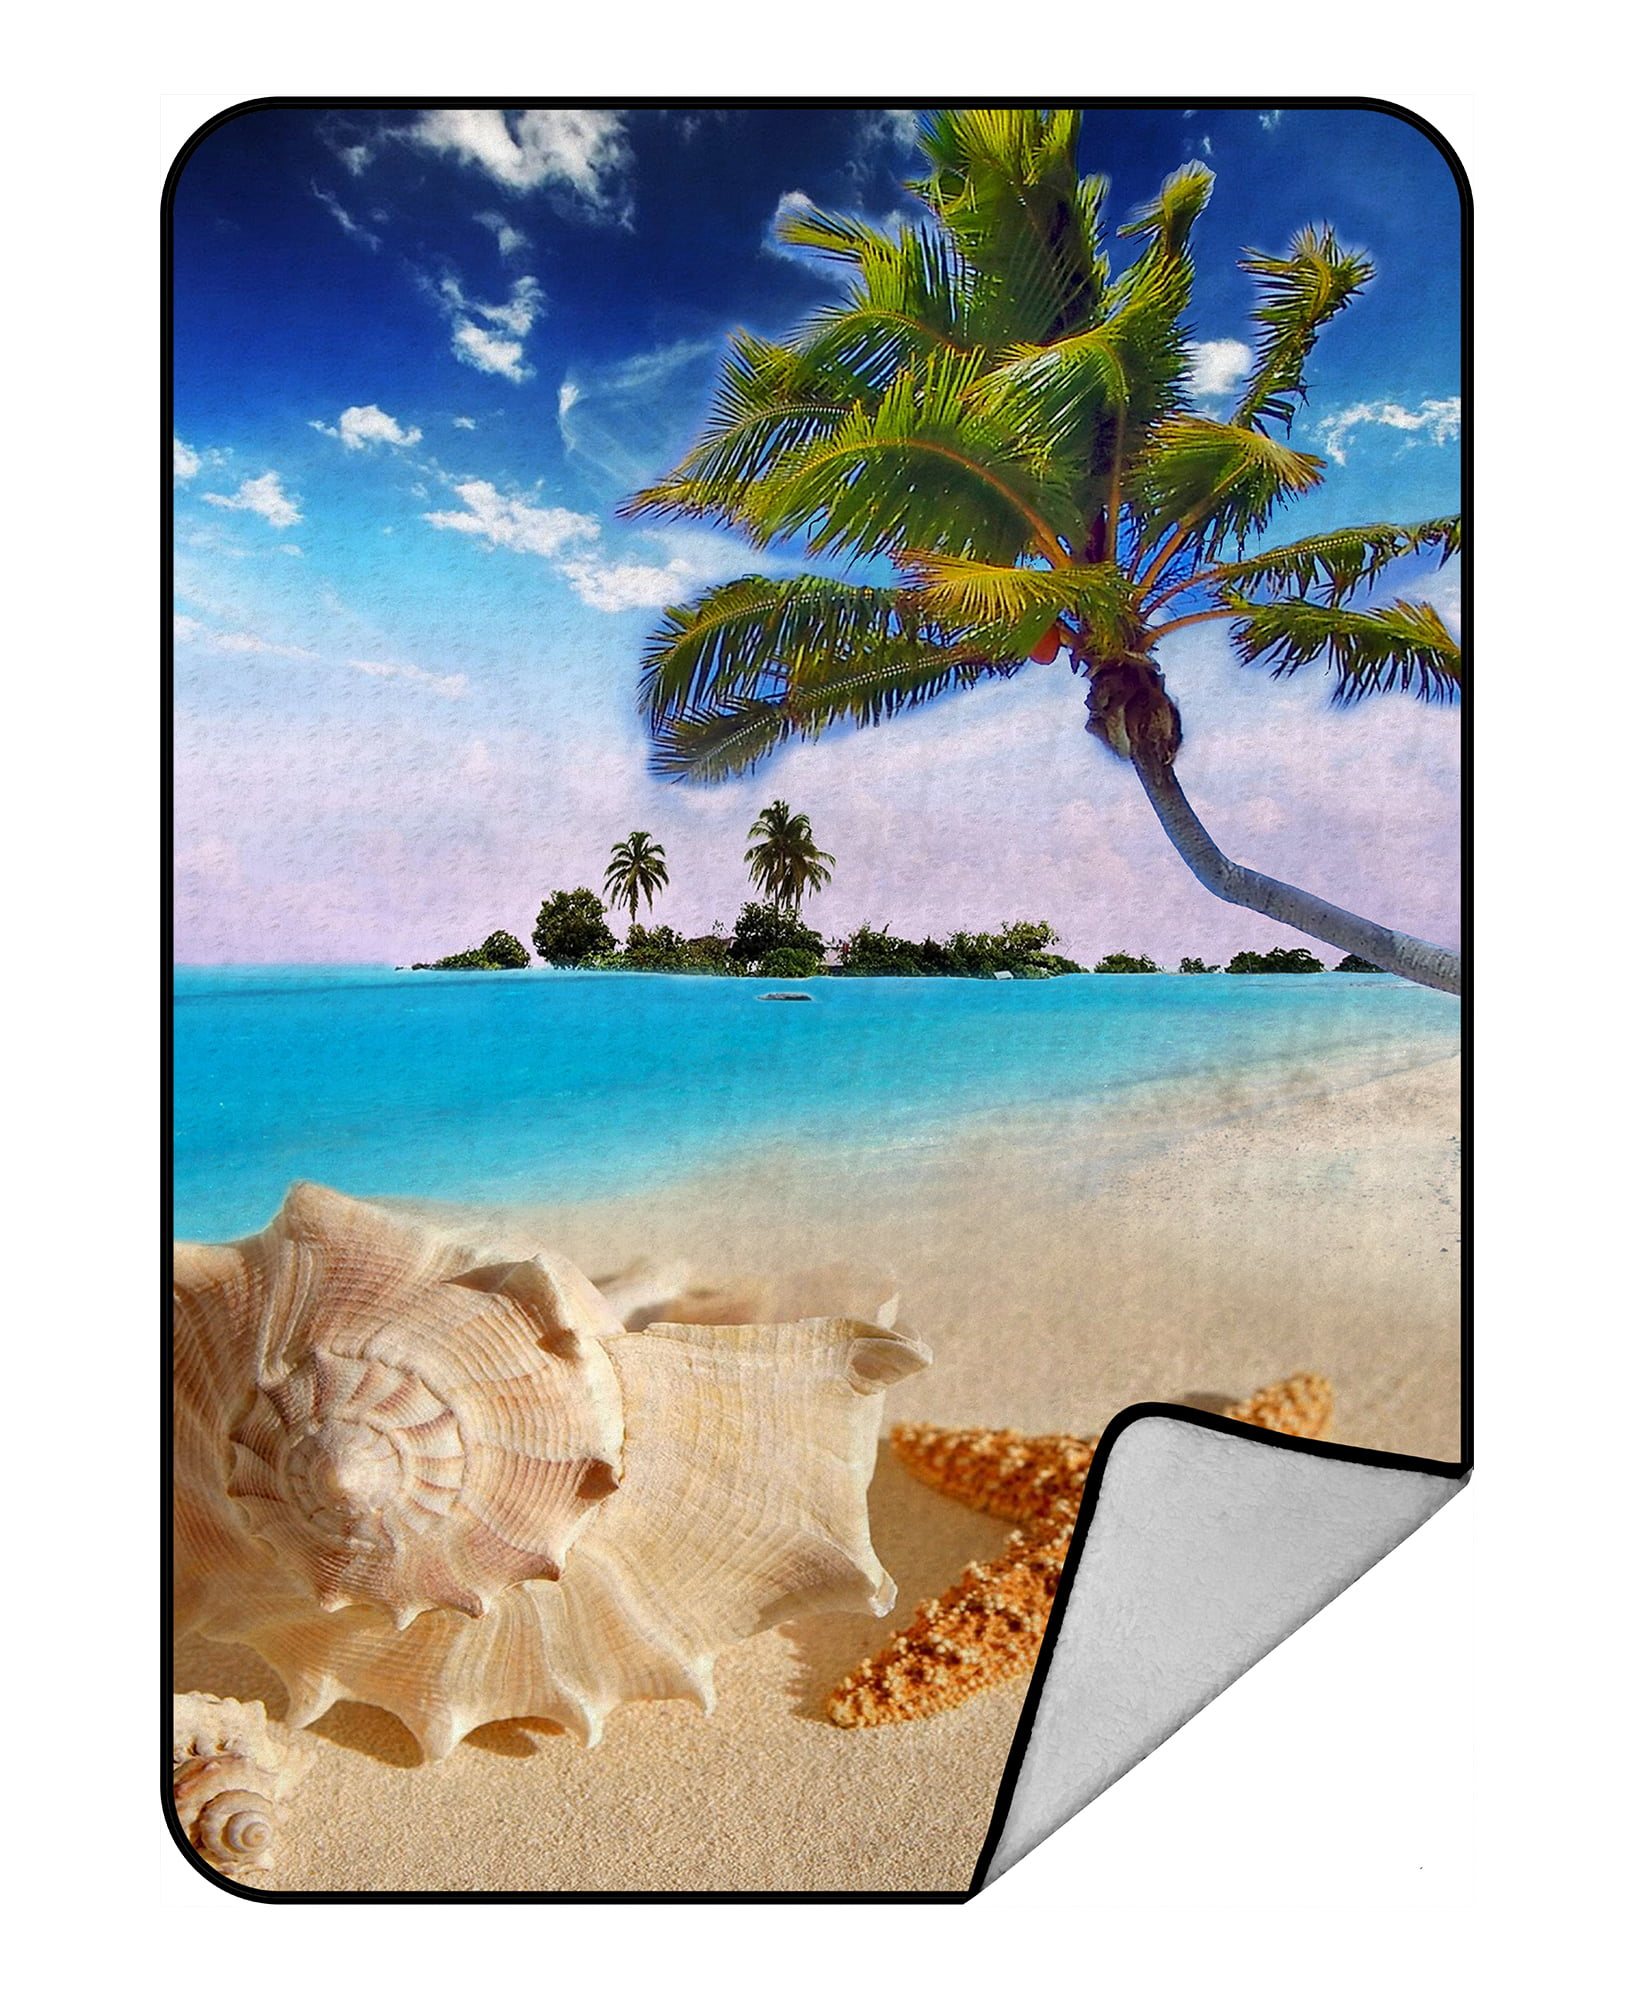 Details about   3D Palm Eye ZHU1346 Summer Plush Fleece Blanket Picnic Beach Towel show original title 